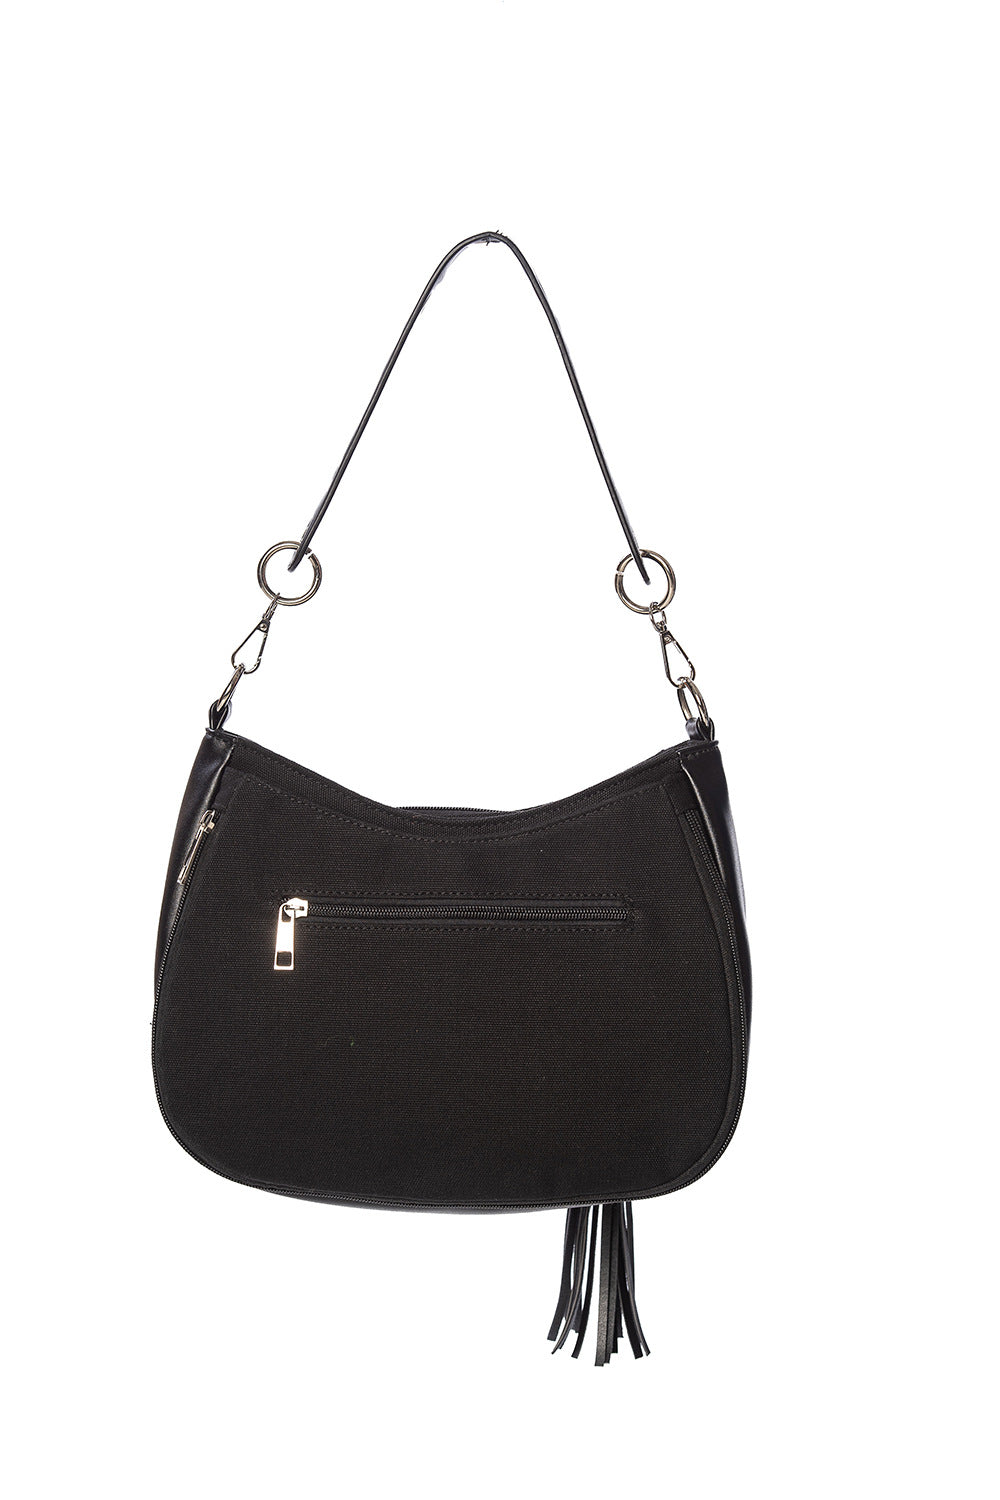 Banned Alternative Tamora Corset Handbag